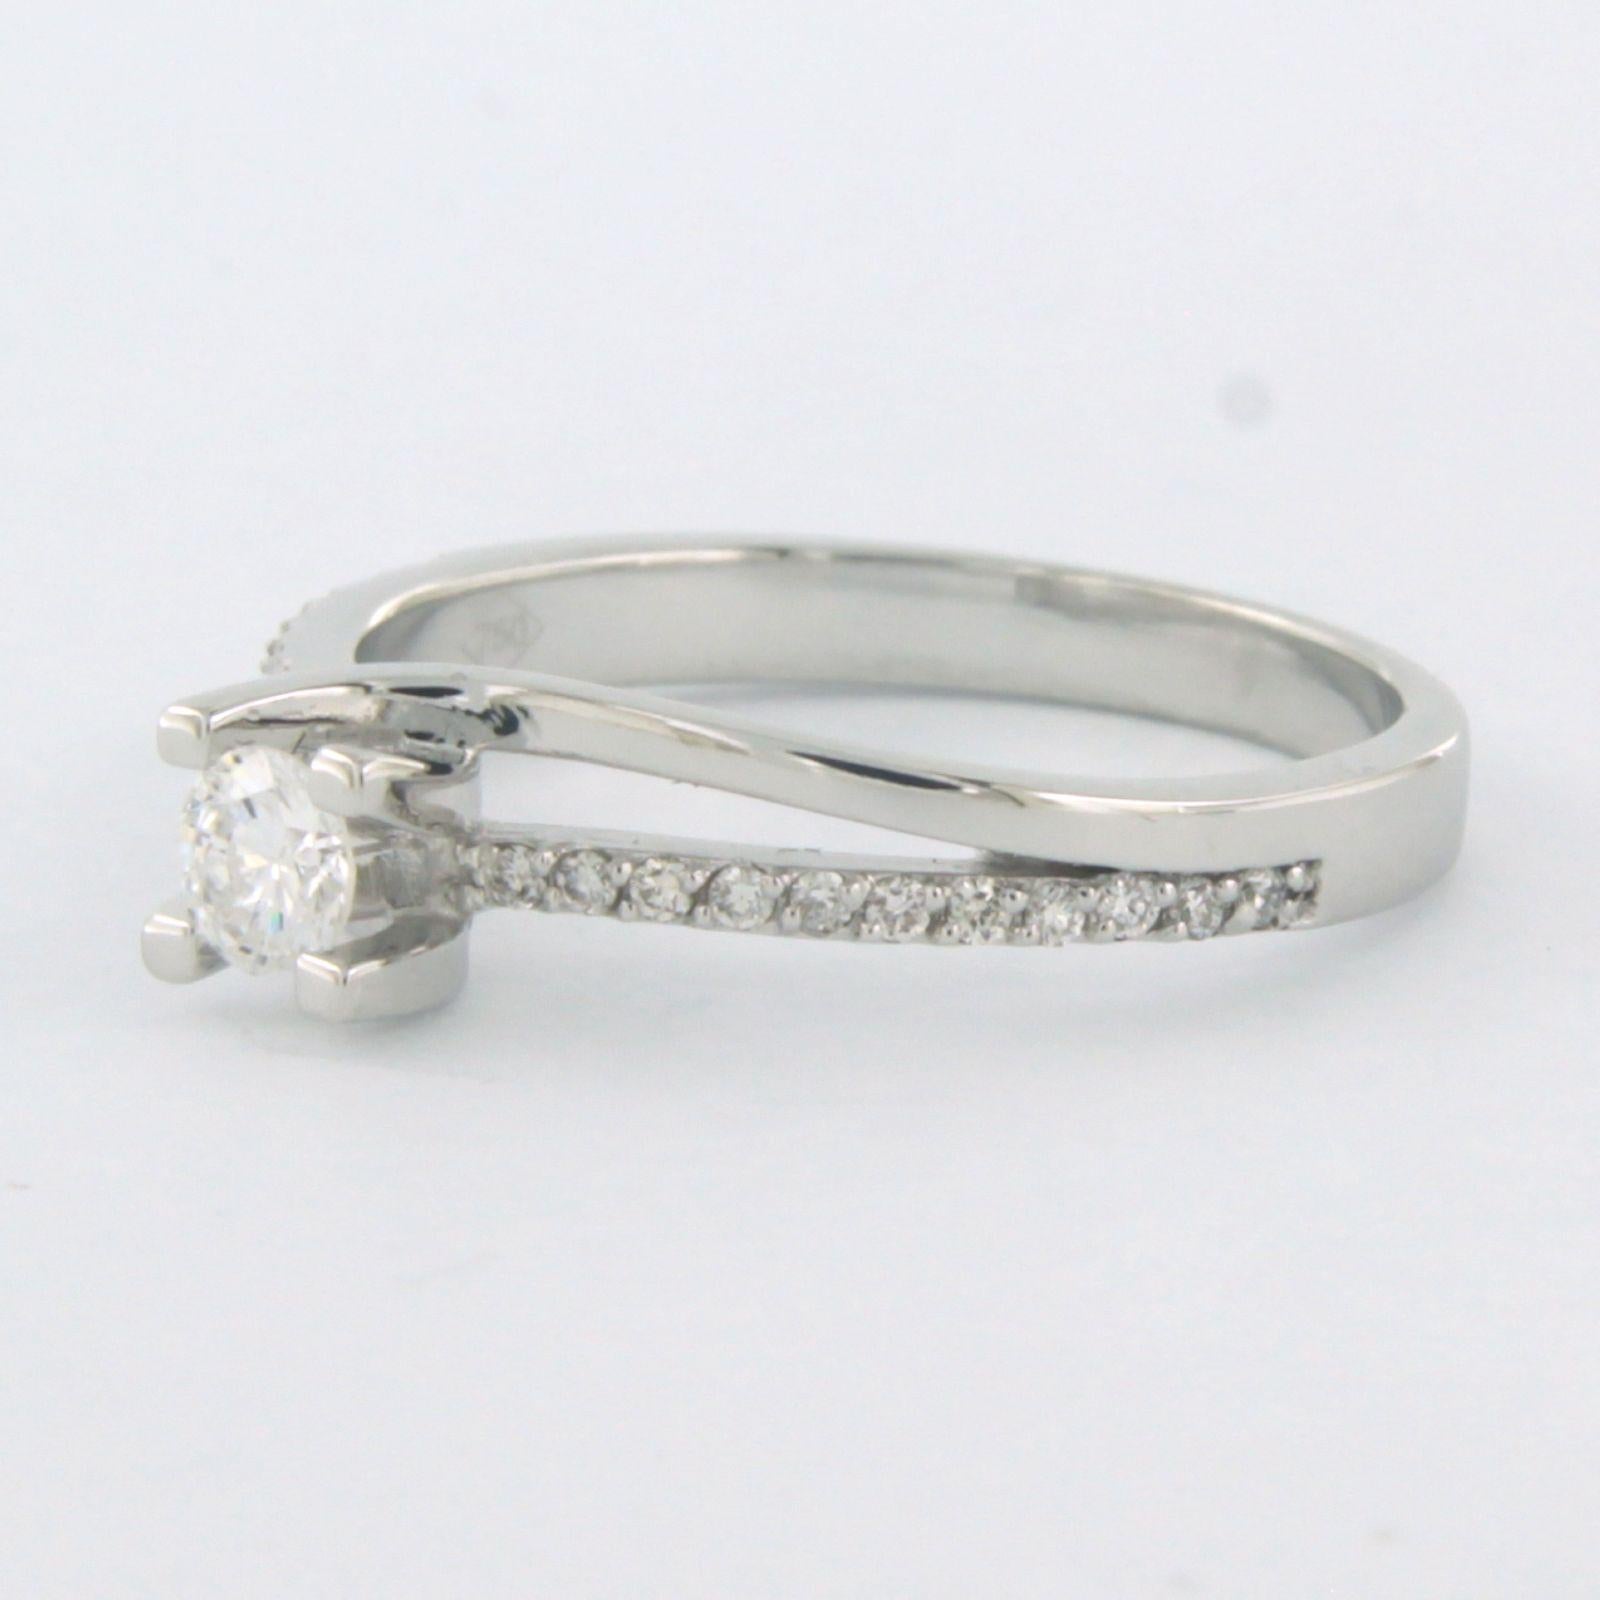 Brilliant Cut 18k white gold ring with brilliant cut diamond. 0.32ct For Sale